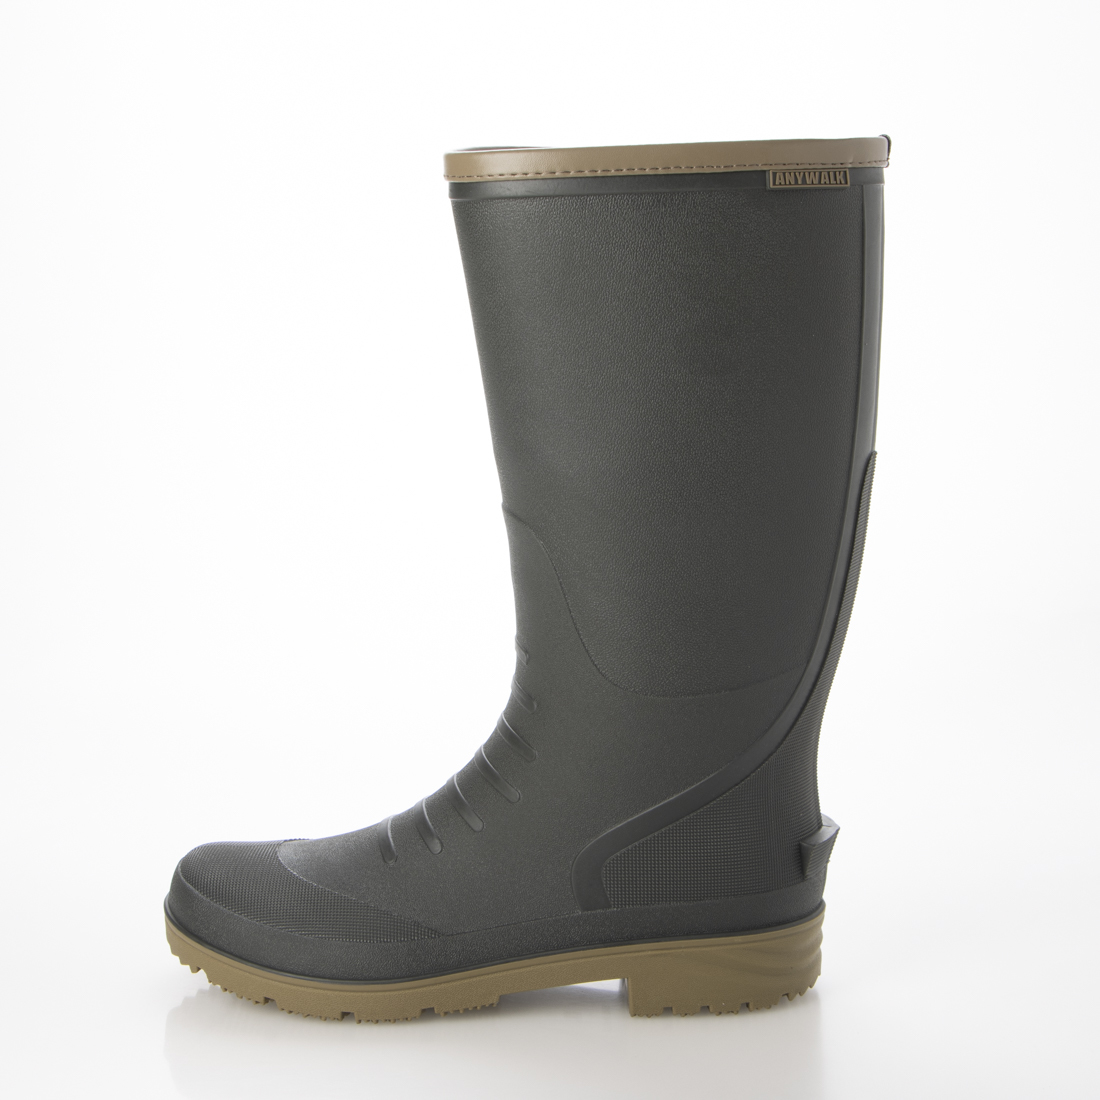  men's rain long boots rain shoes Work boots rain shoes complete waterproof . slide bottom anti-bacterial deodorization light weight khaki 23081-kha-m ( 25.0 - 25.5 )